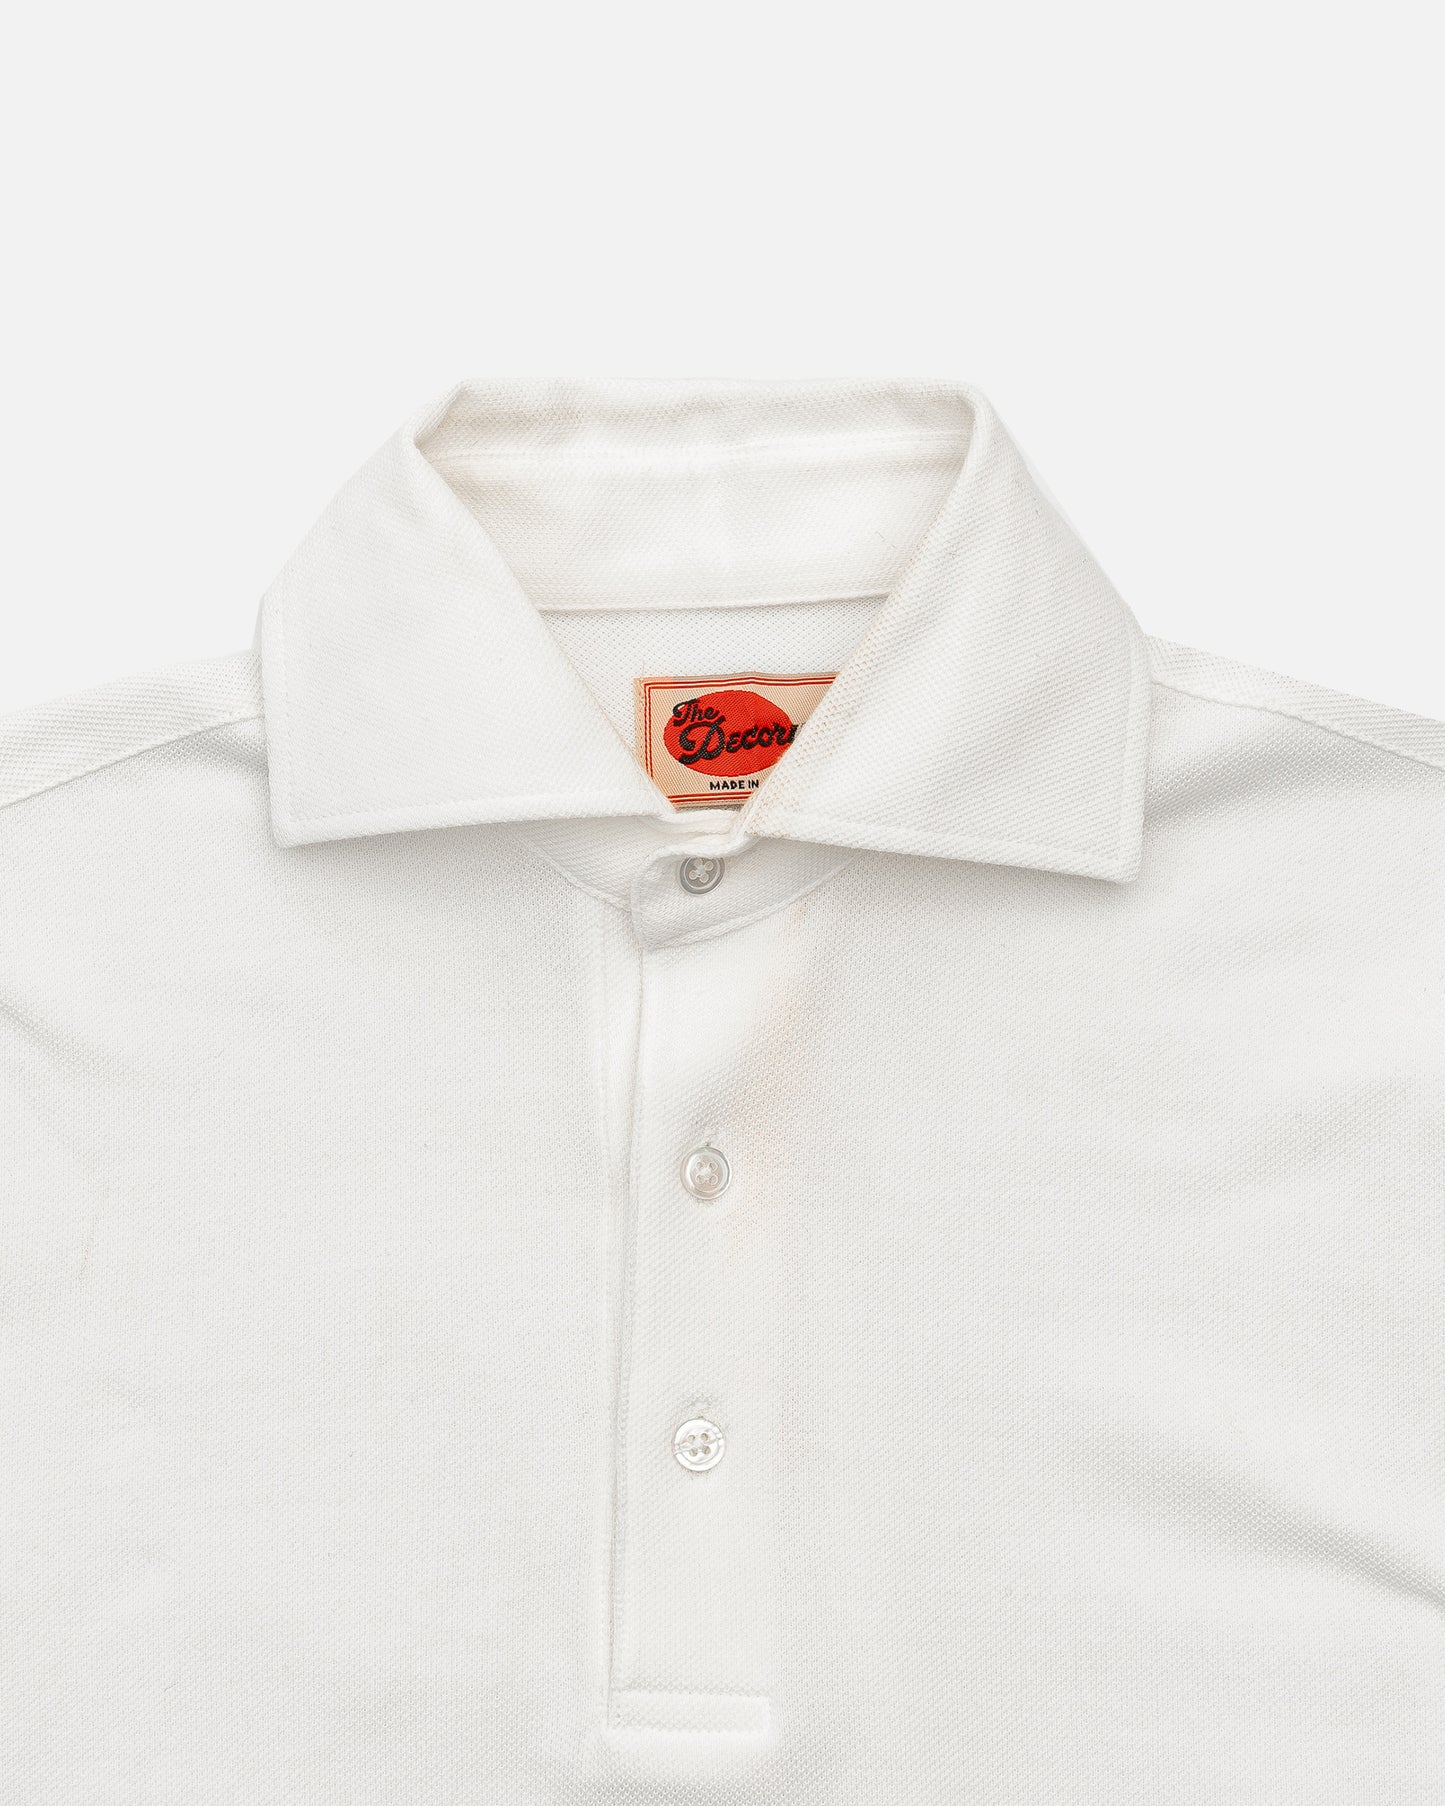 The Decorum Short Sleeve Polo Shirt - White